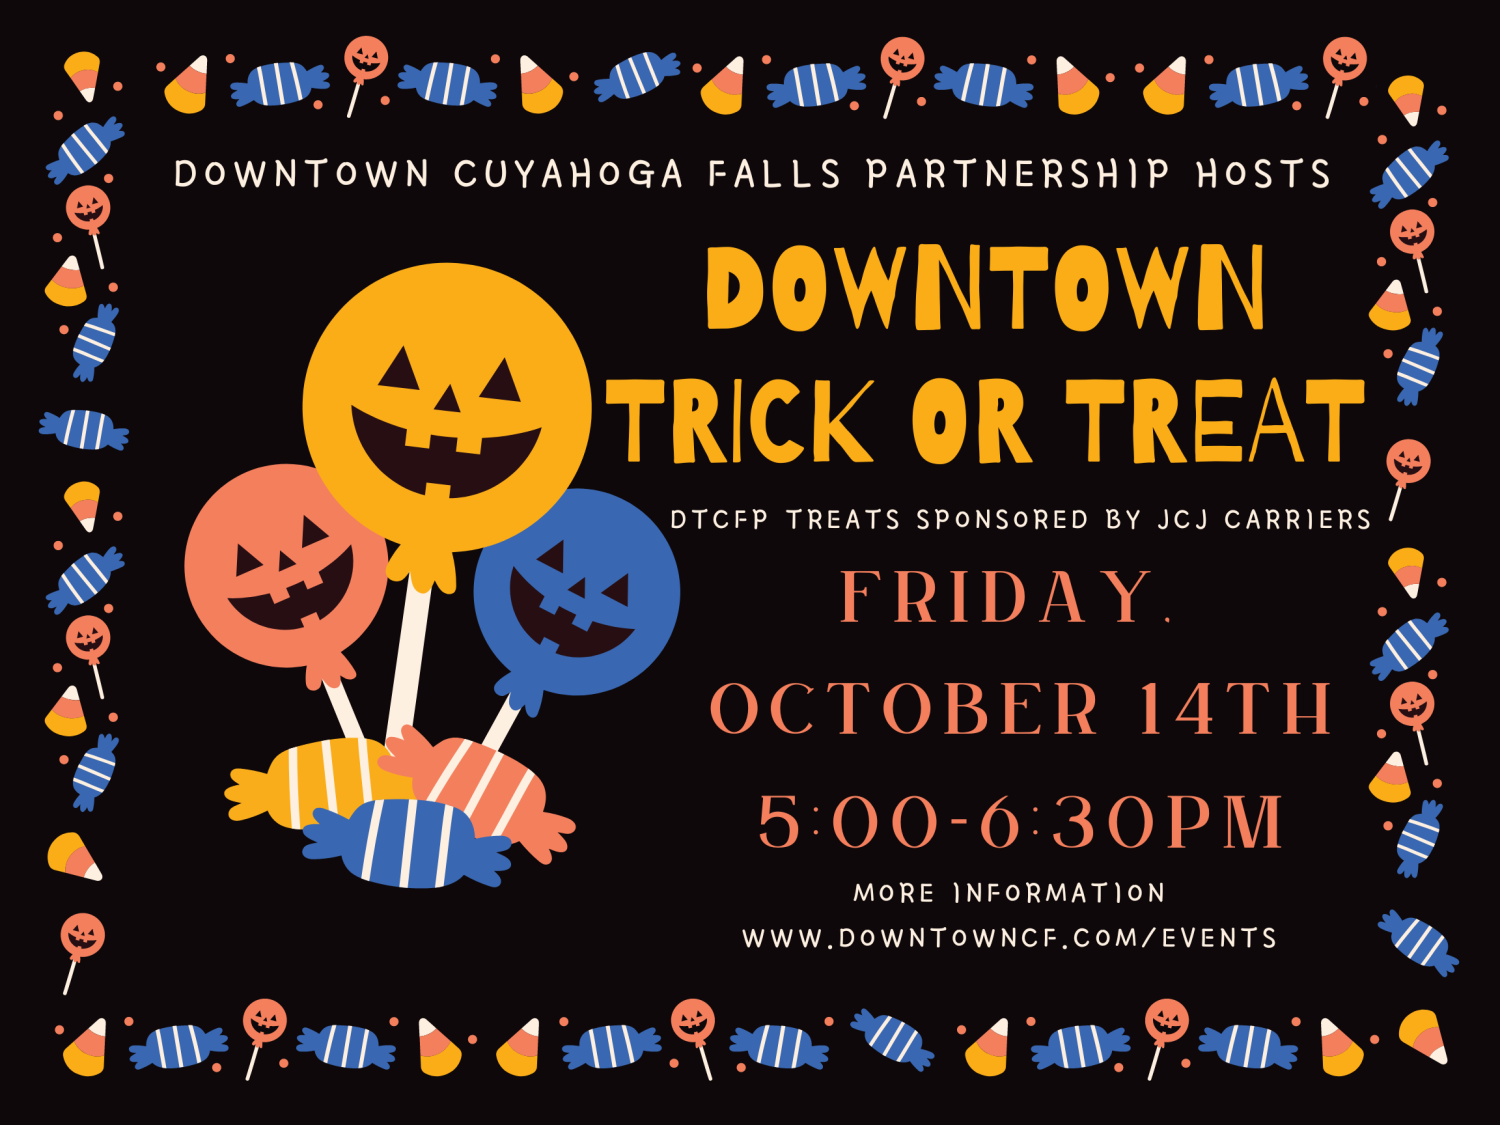 DTCF Trick or Treat & Halloween Extravaganza Downtown Cuyahoga Falls